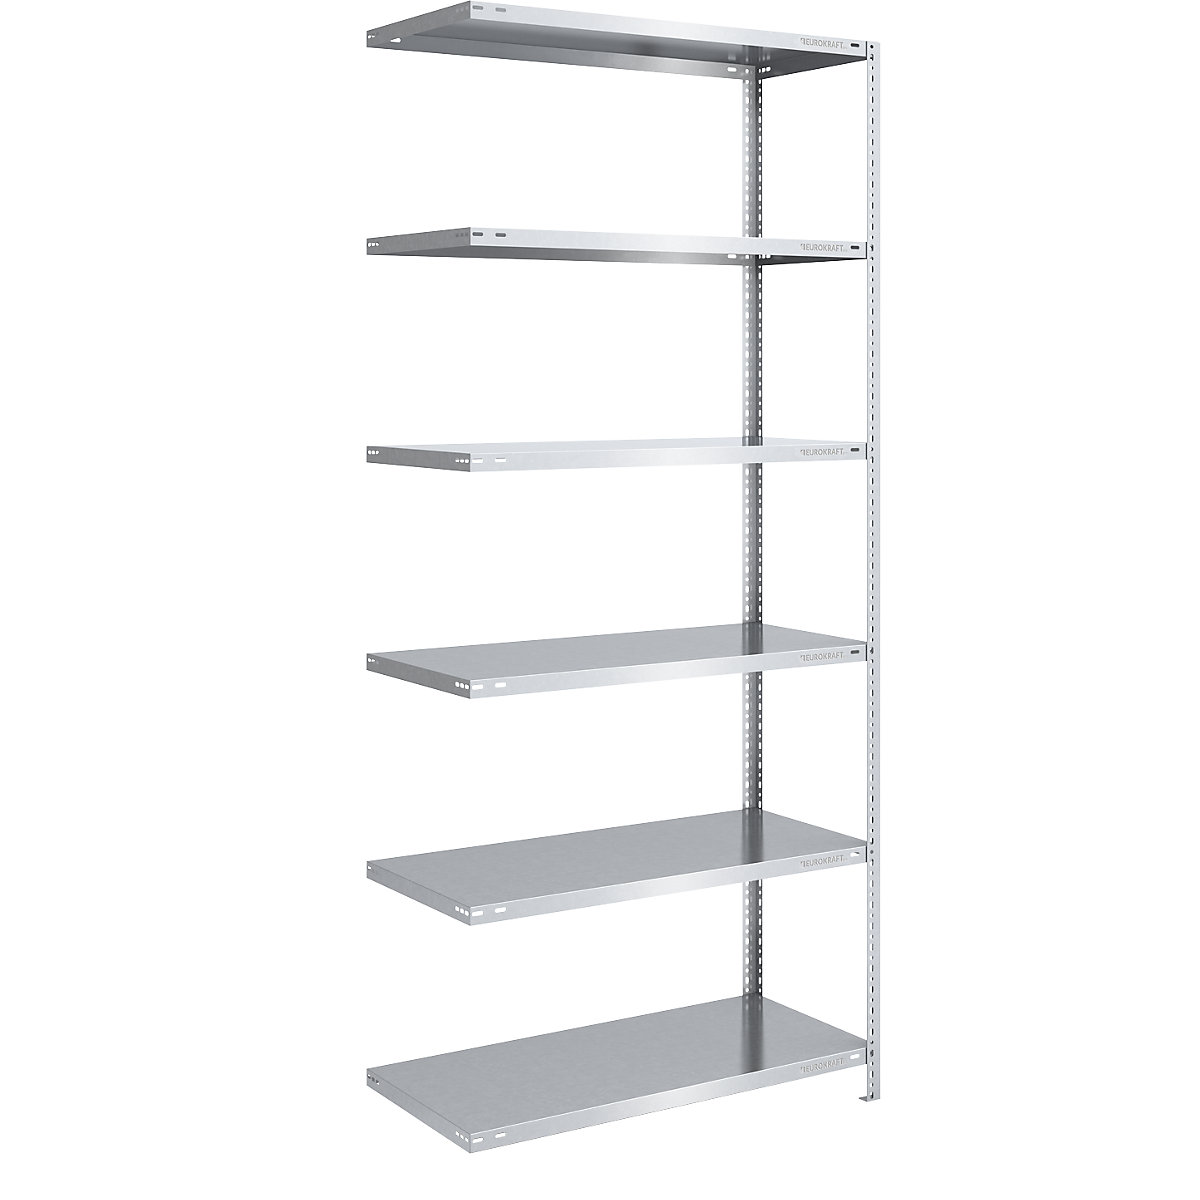 Bolt-together shelf unit, light duty, zinc plated – eurokraft pro, shelf unit height 2500 mm, shelf width 1000 mm, depth 600 mm, extension shelf unit-6